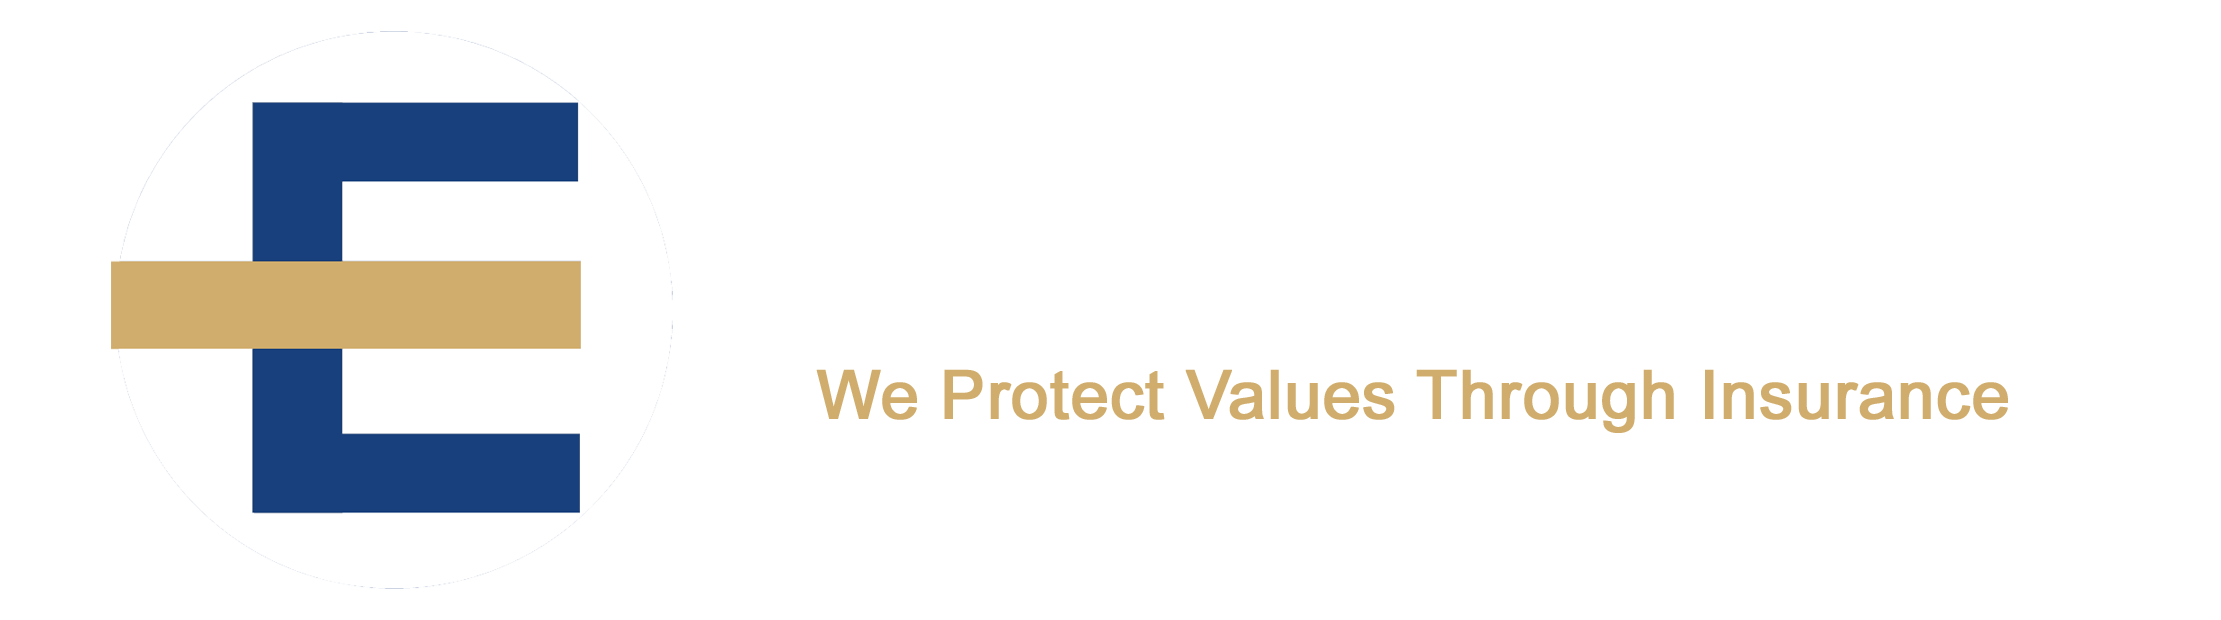 Enterprise Insurance